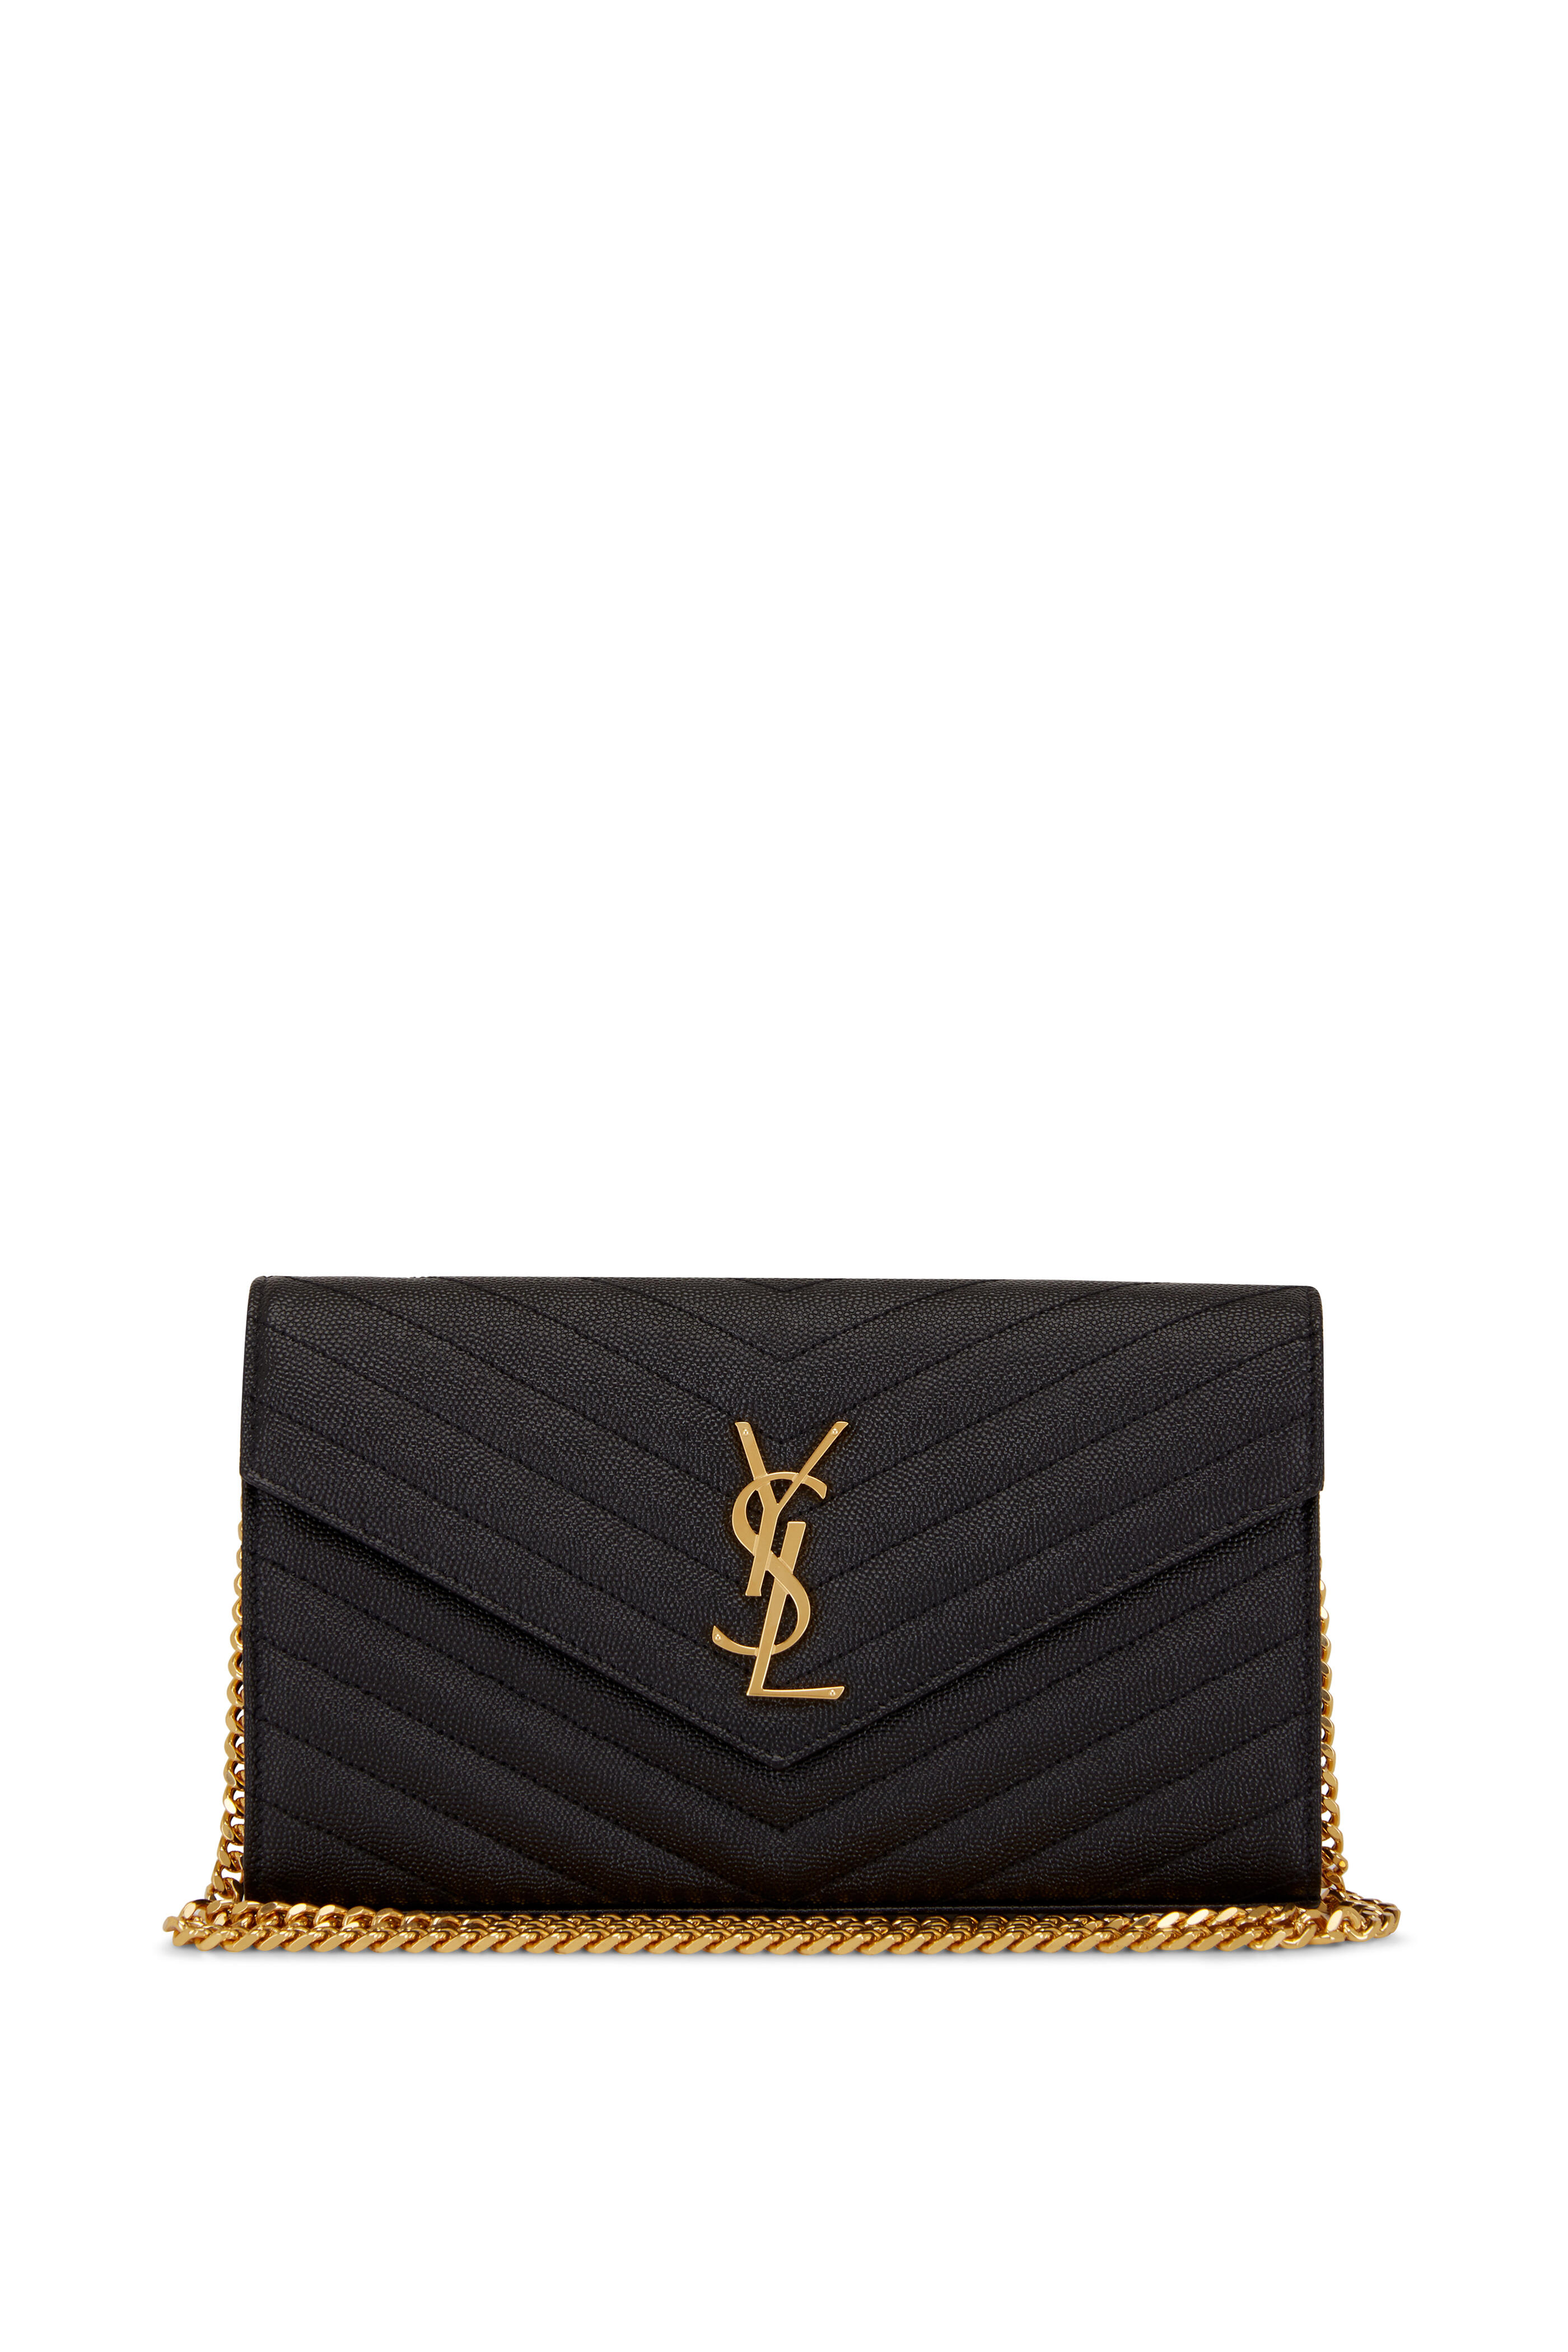 Yves Saint Laurent, Bags, Saint Laurent Monogram Ysl Woc Black Bag